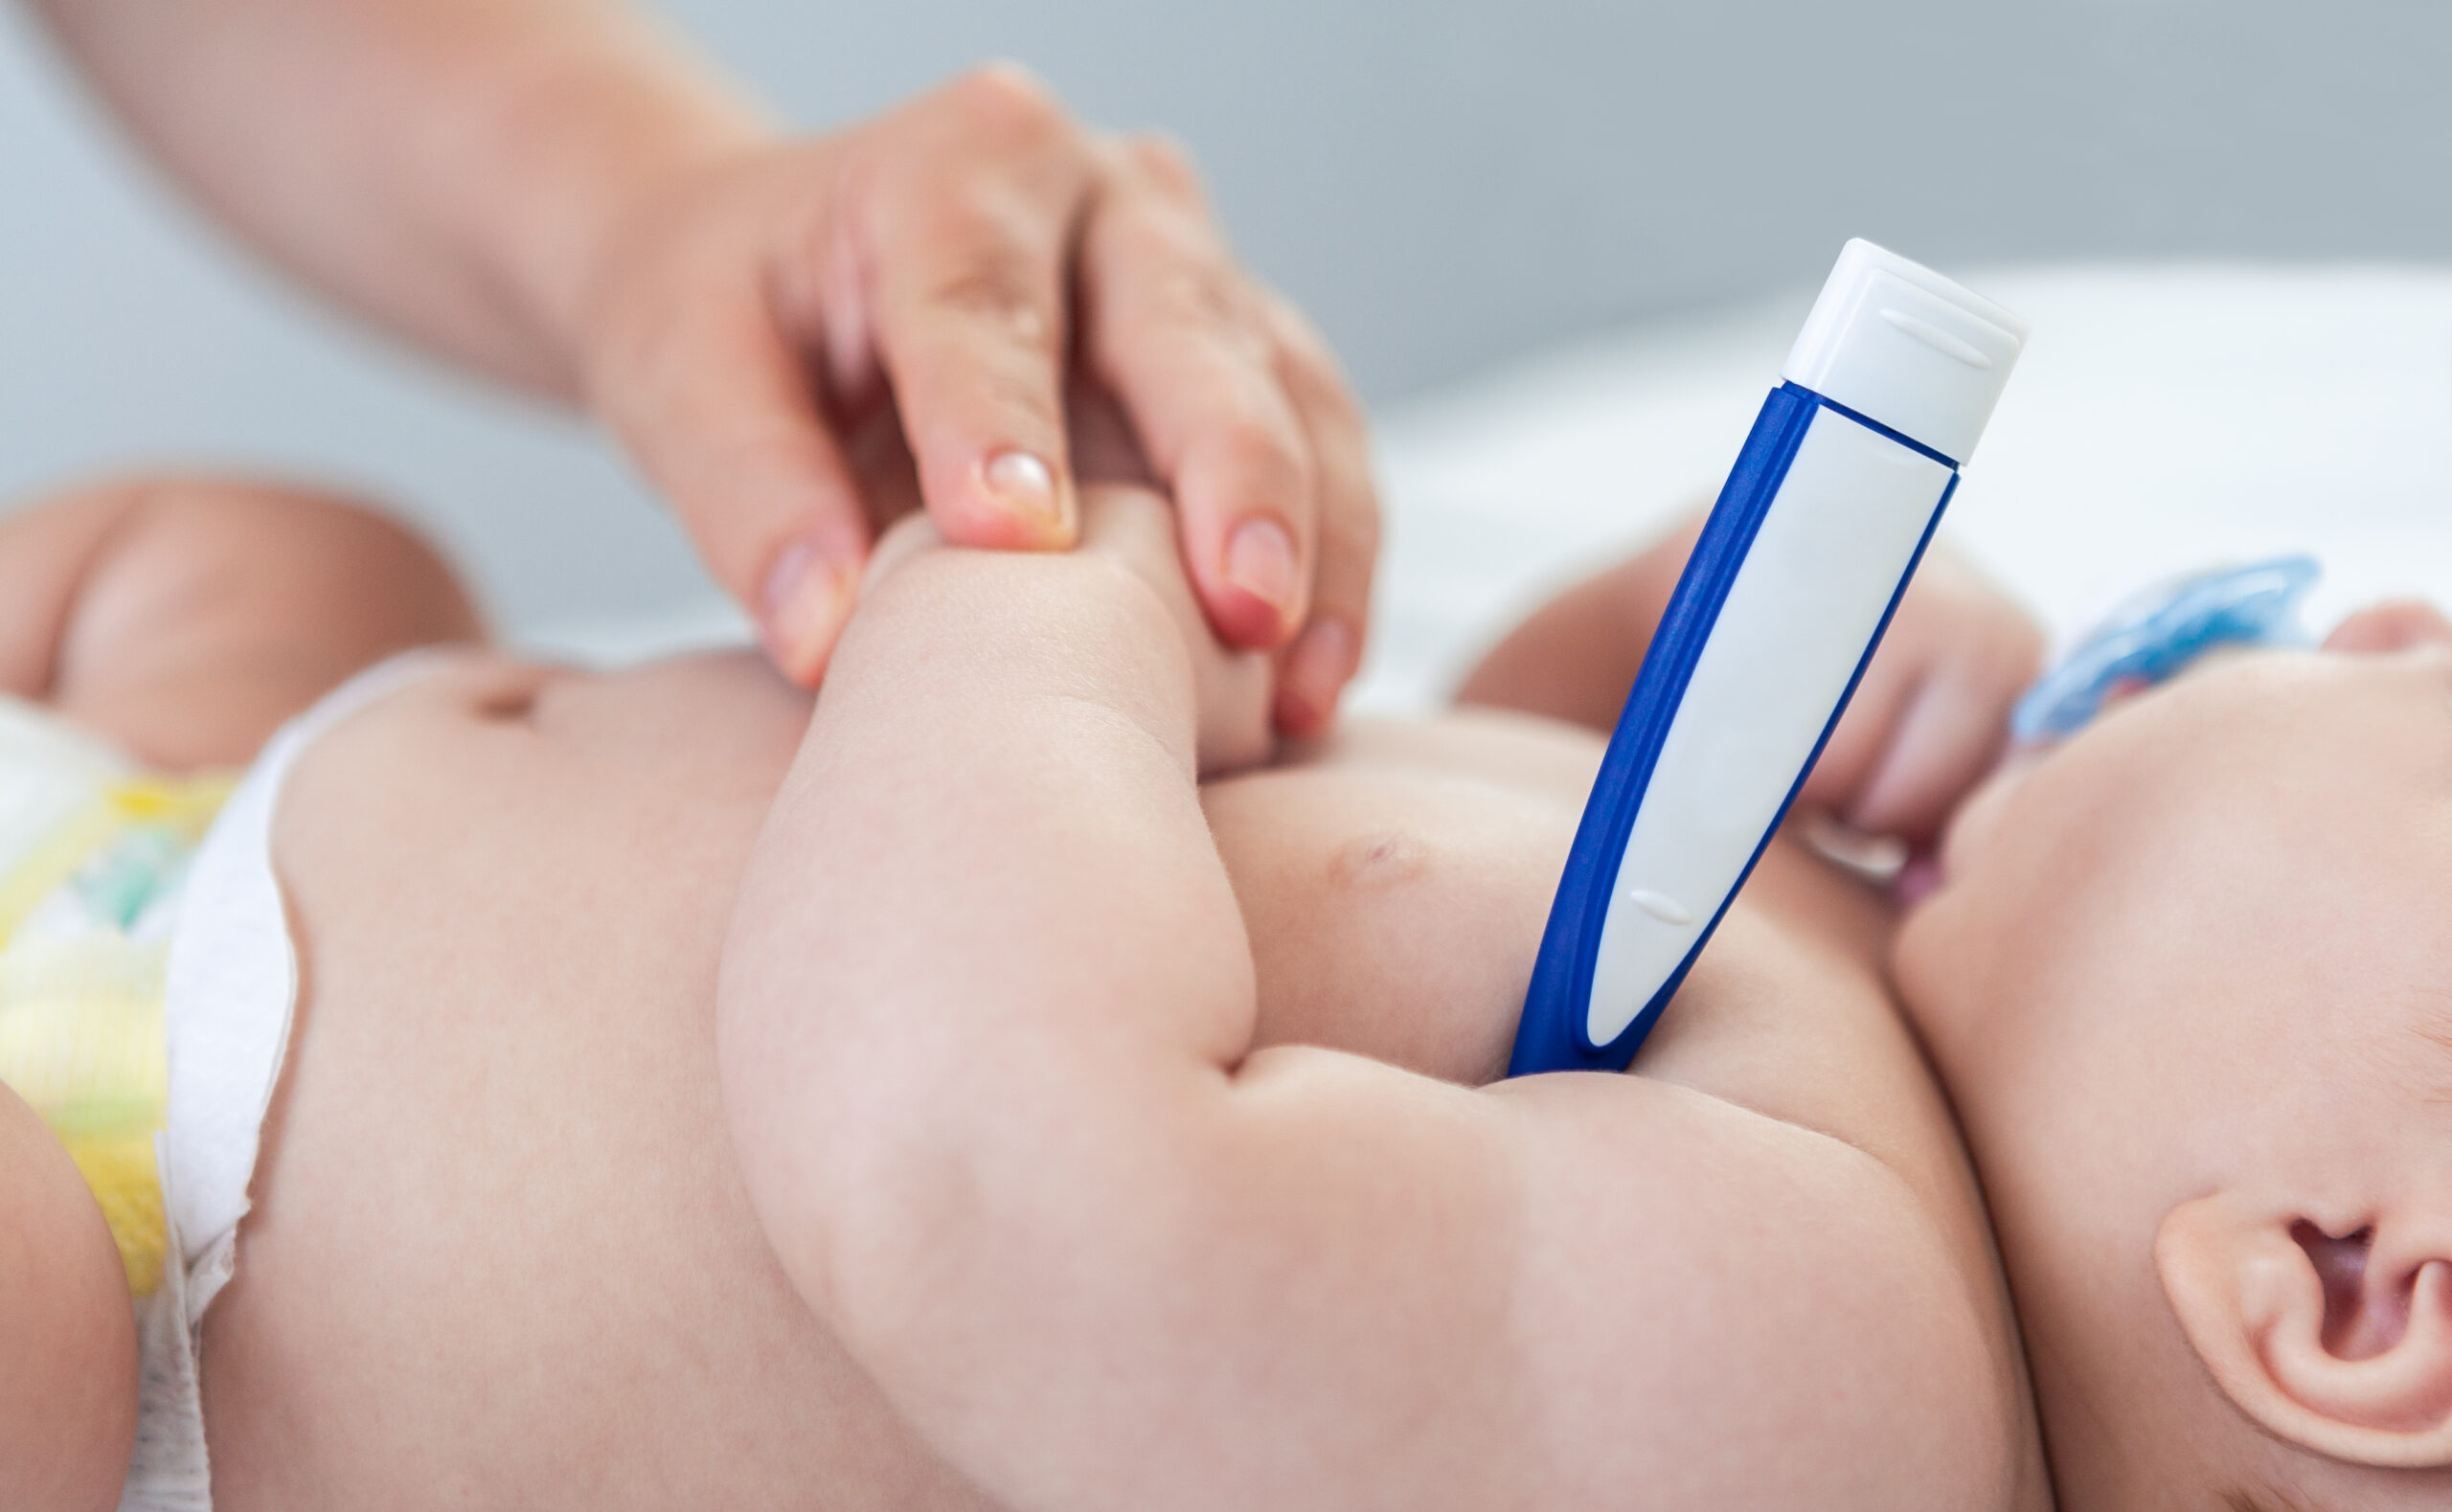 female doctor examining baby boy toddler using a t 2022 09 29 17 04 07 utc scaled